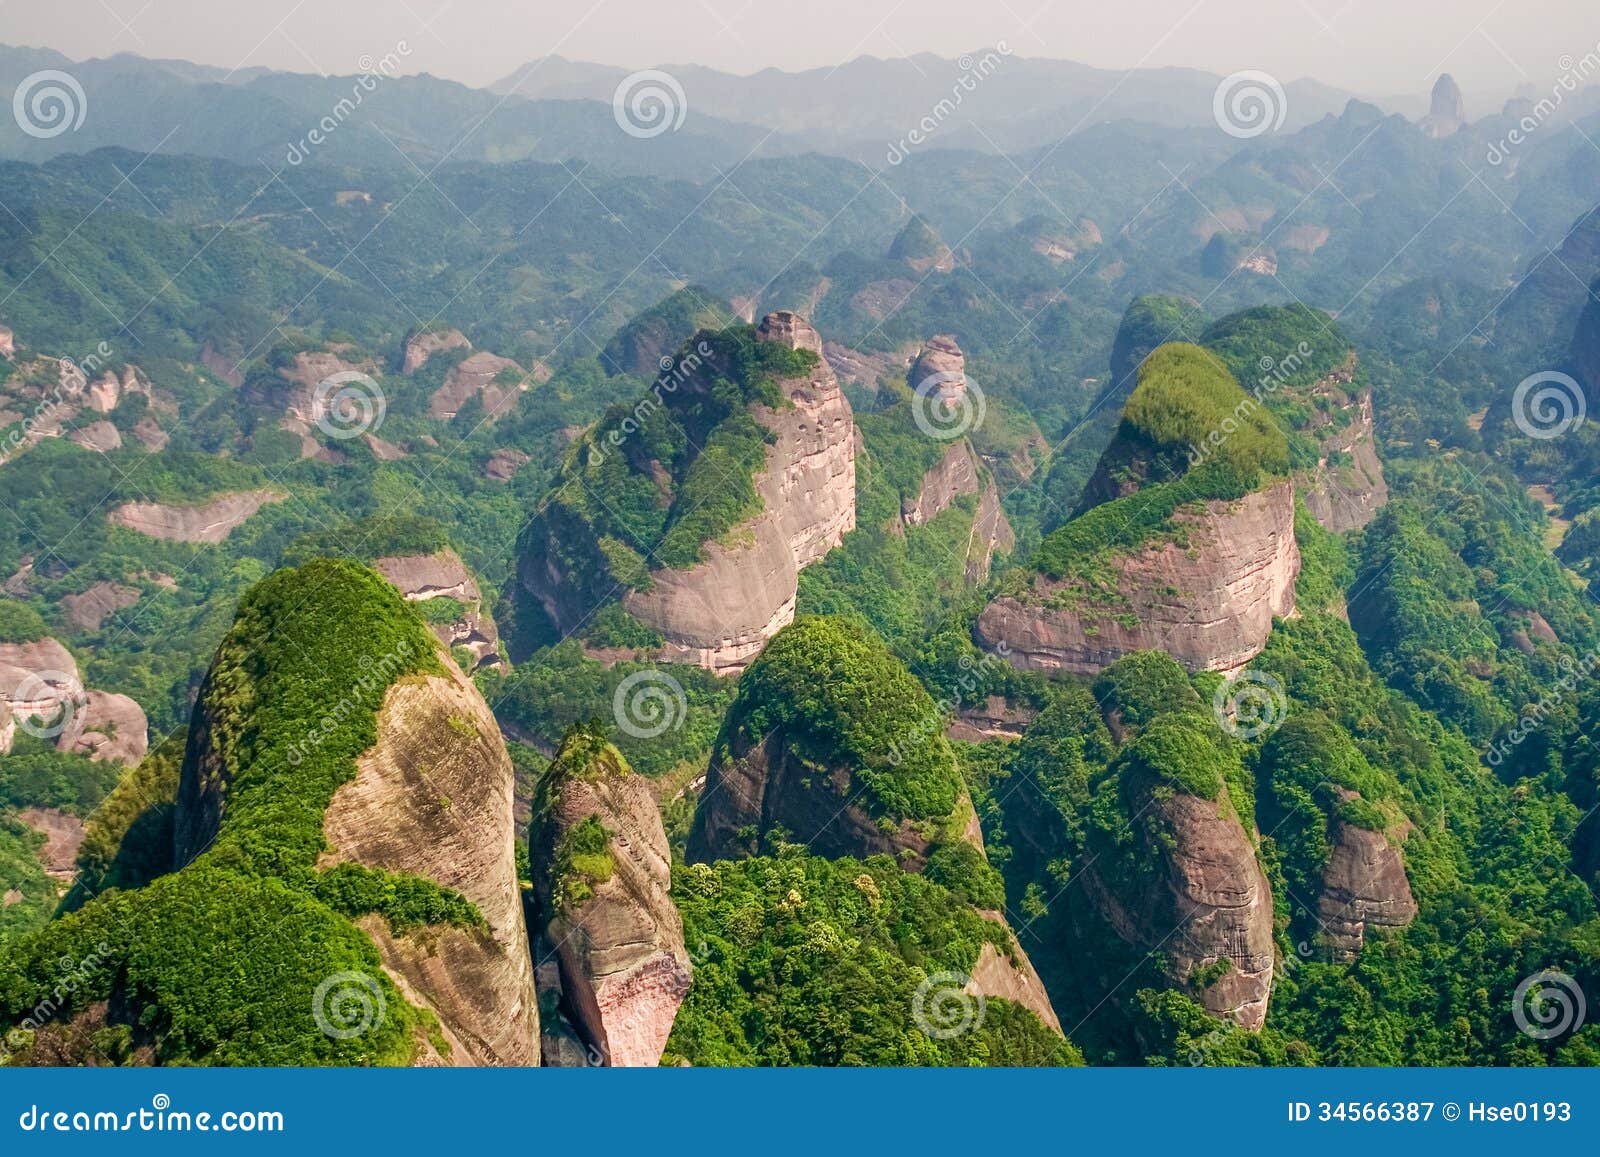 danxia landform,peaks in bajiaozhai